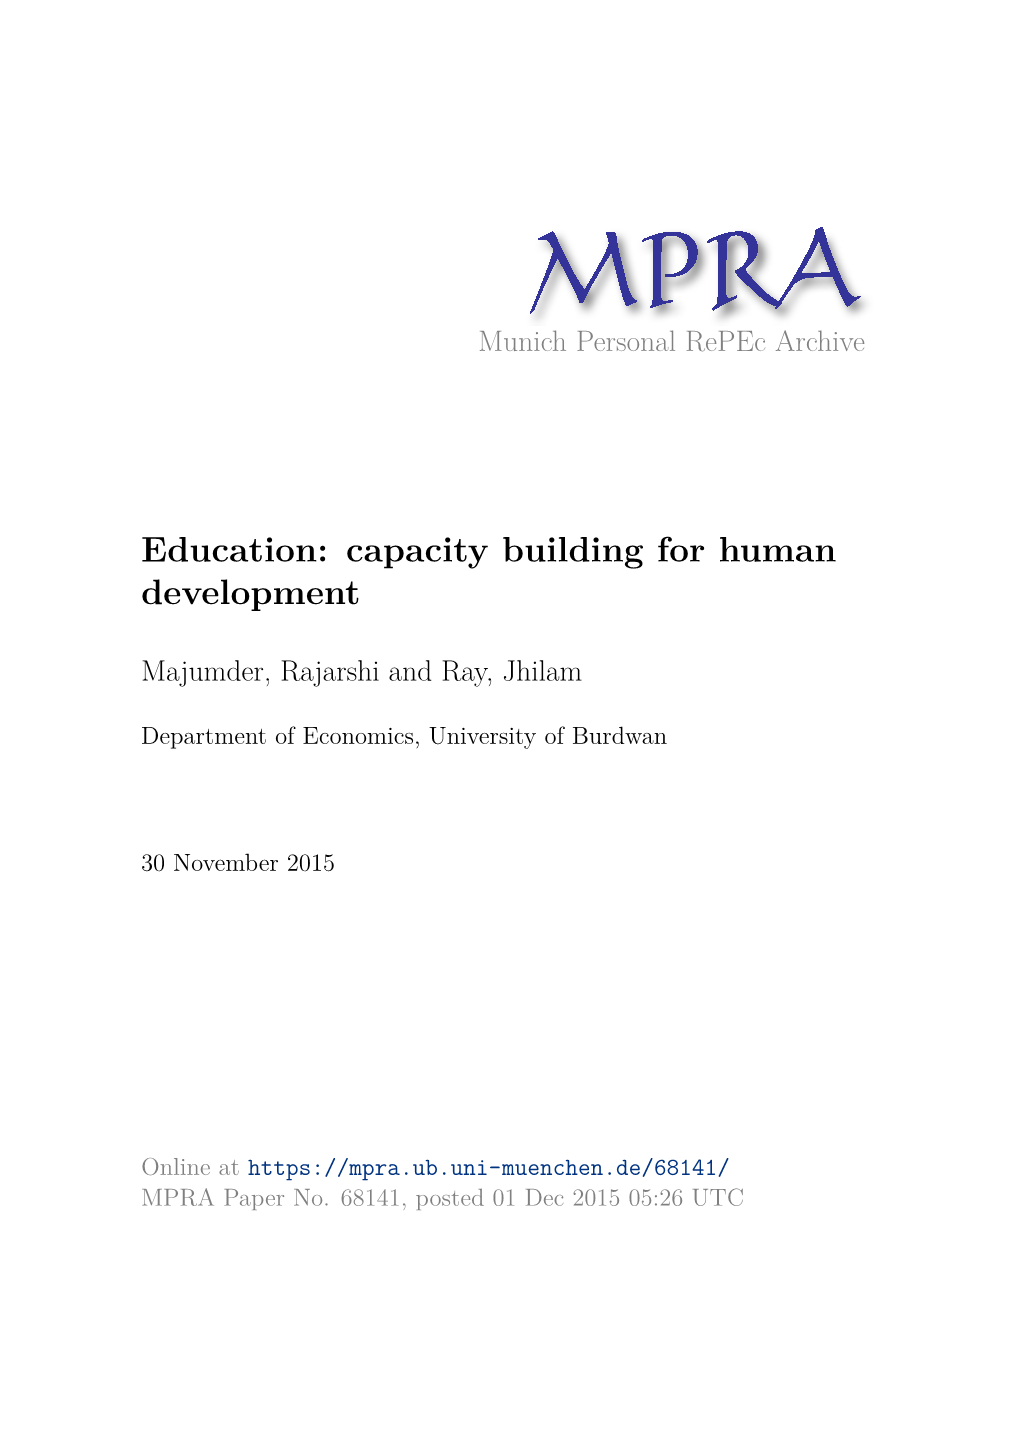 Education: Capacity Building for Human Development